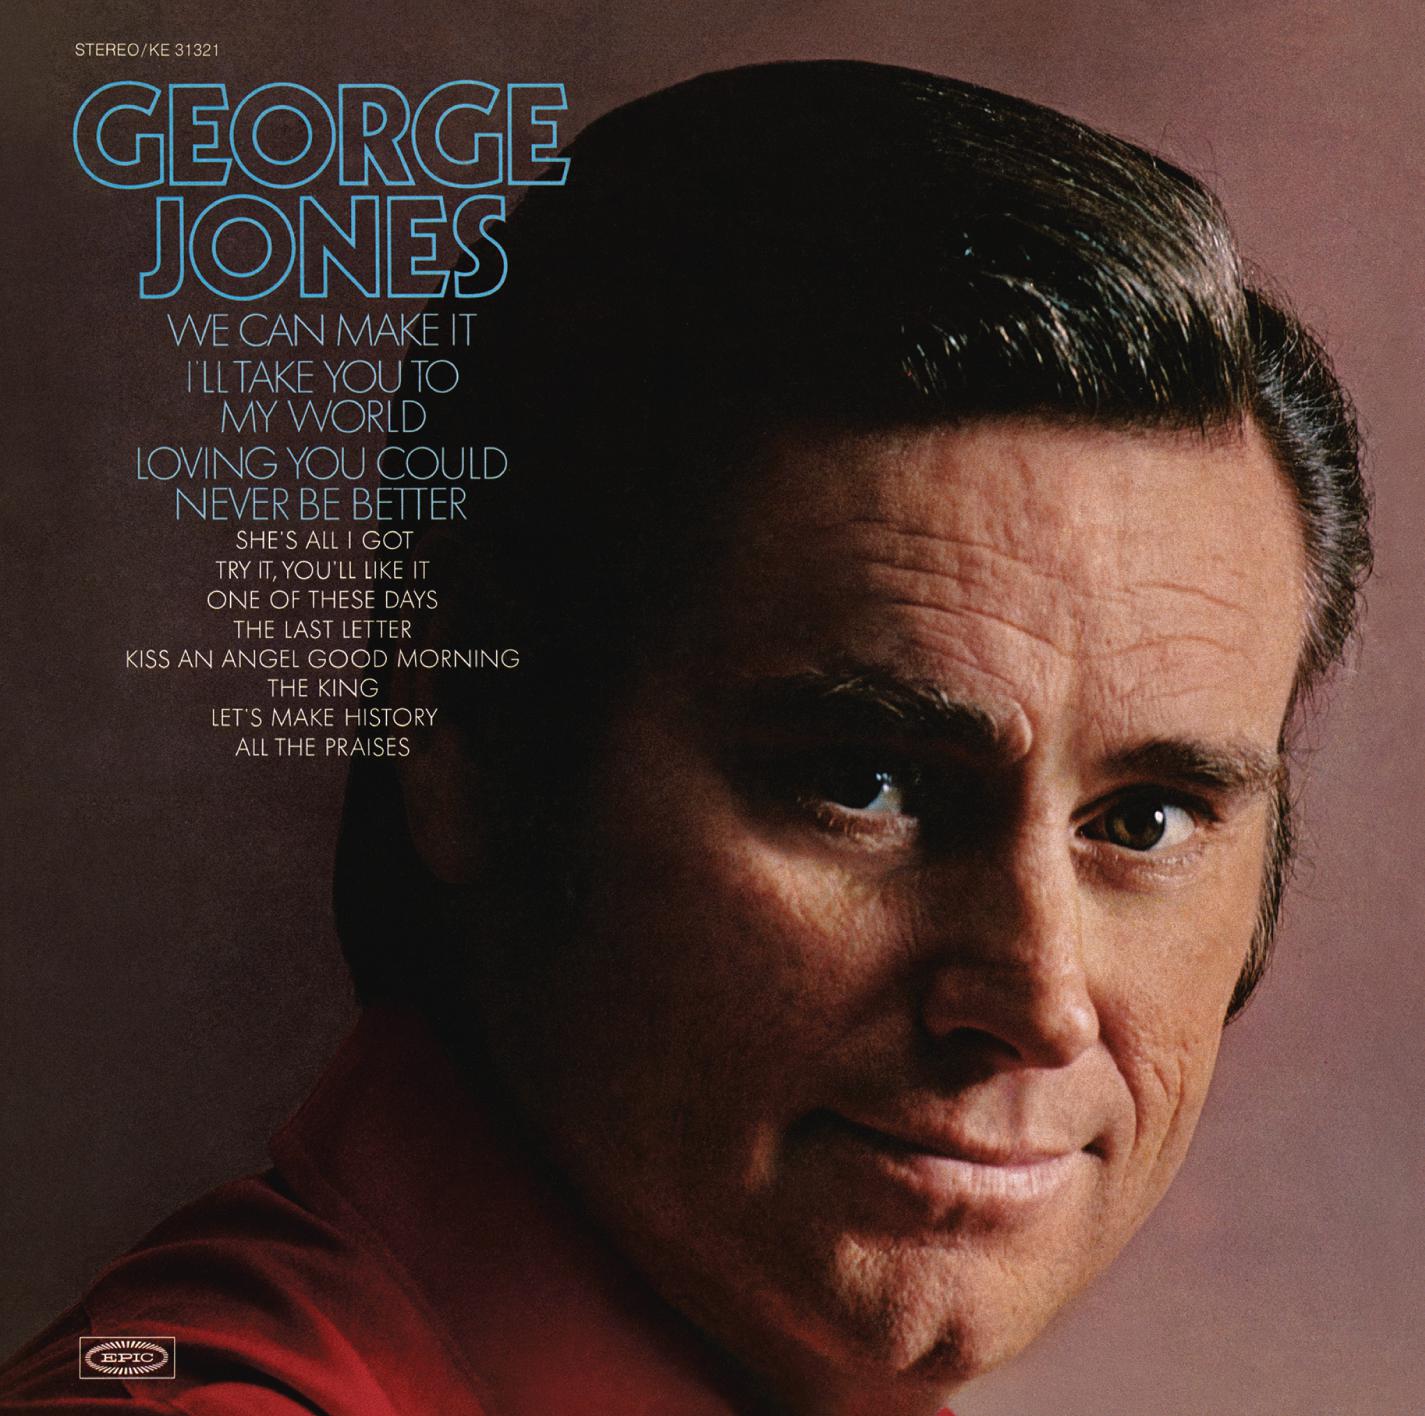 George Jones - George Jones (1972/2014) [HDTracks FLAC 24bit/96kHz]